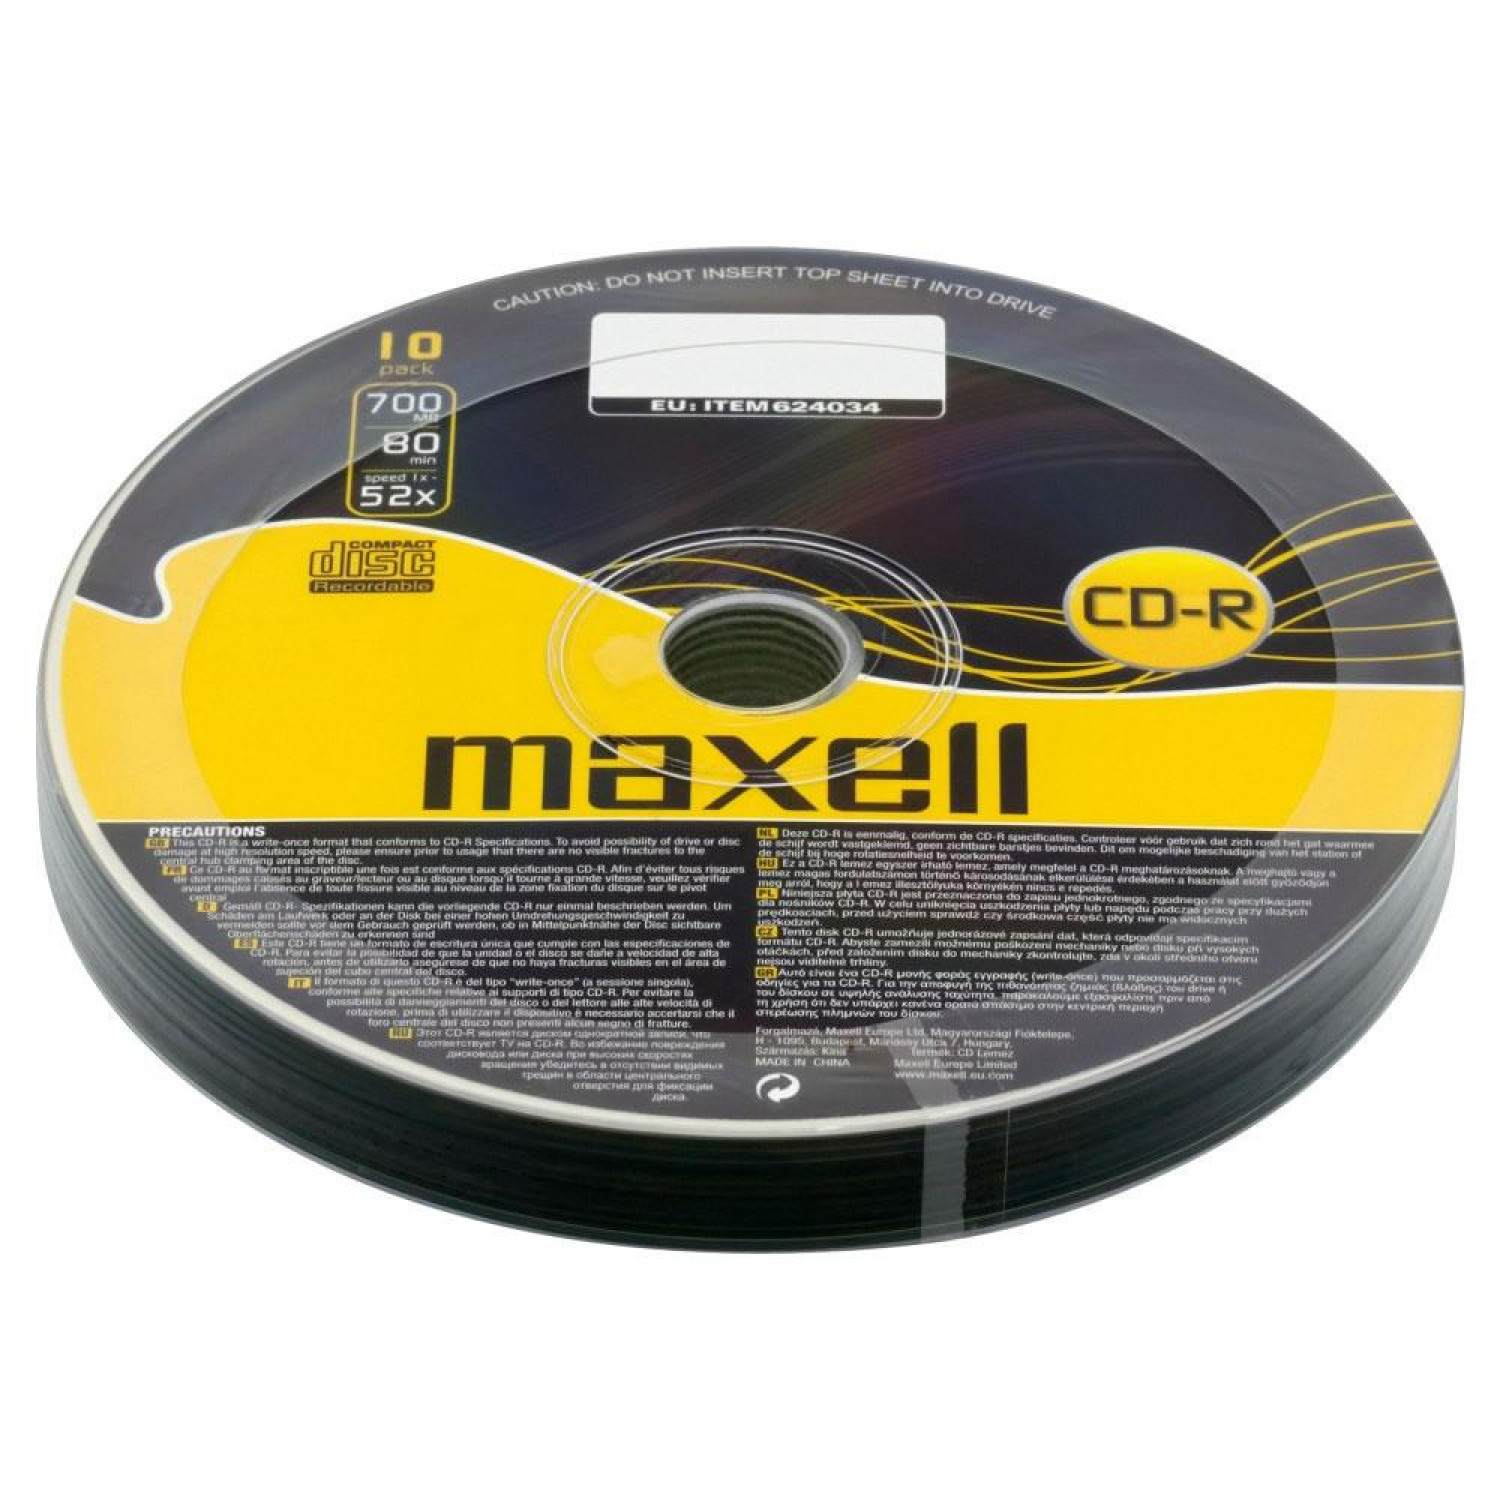 CD-R80 MAXELL, 700MB, 52x, 10 бр